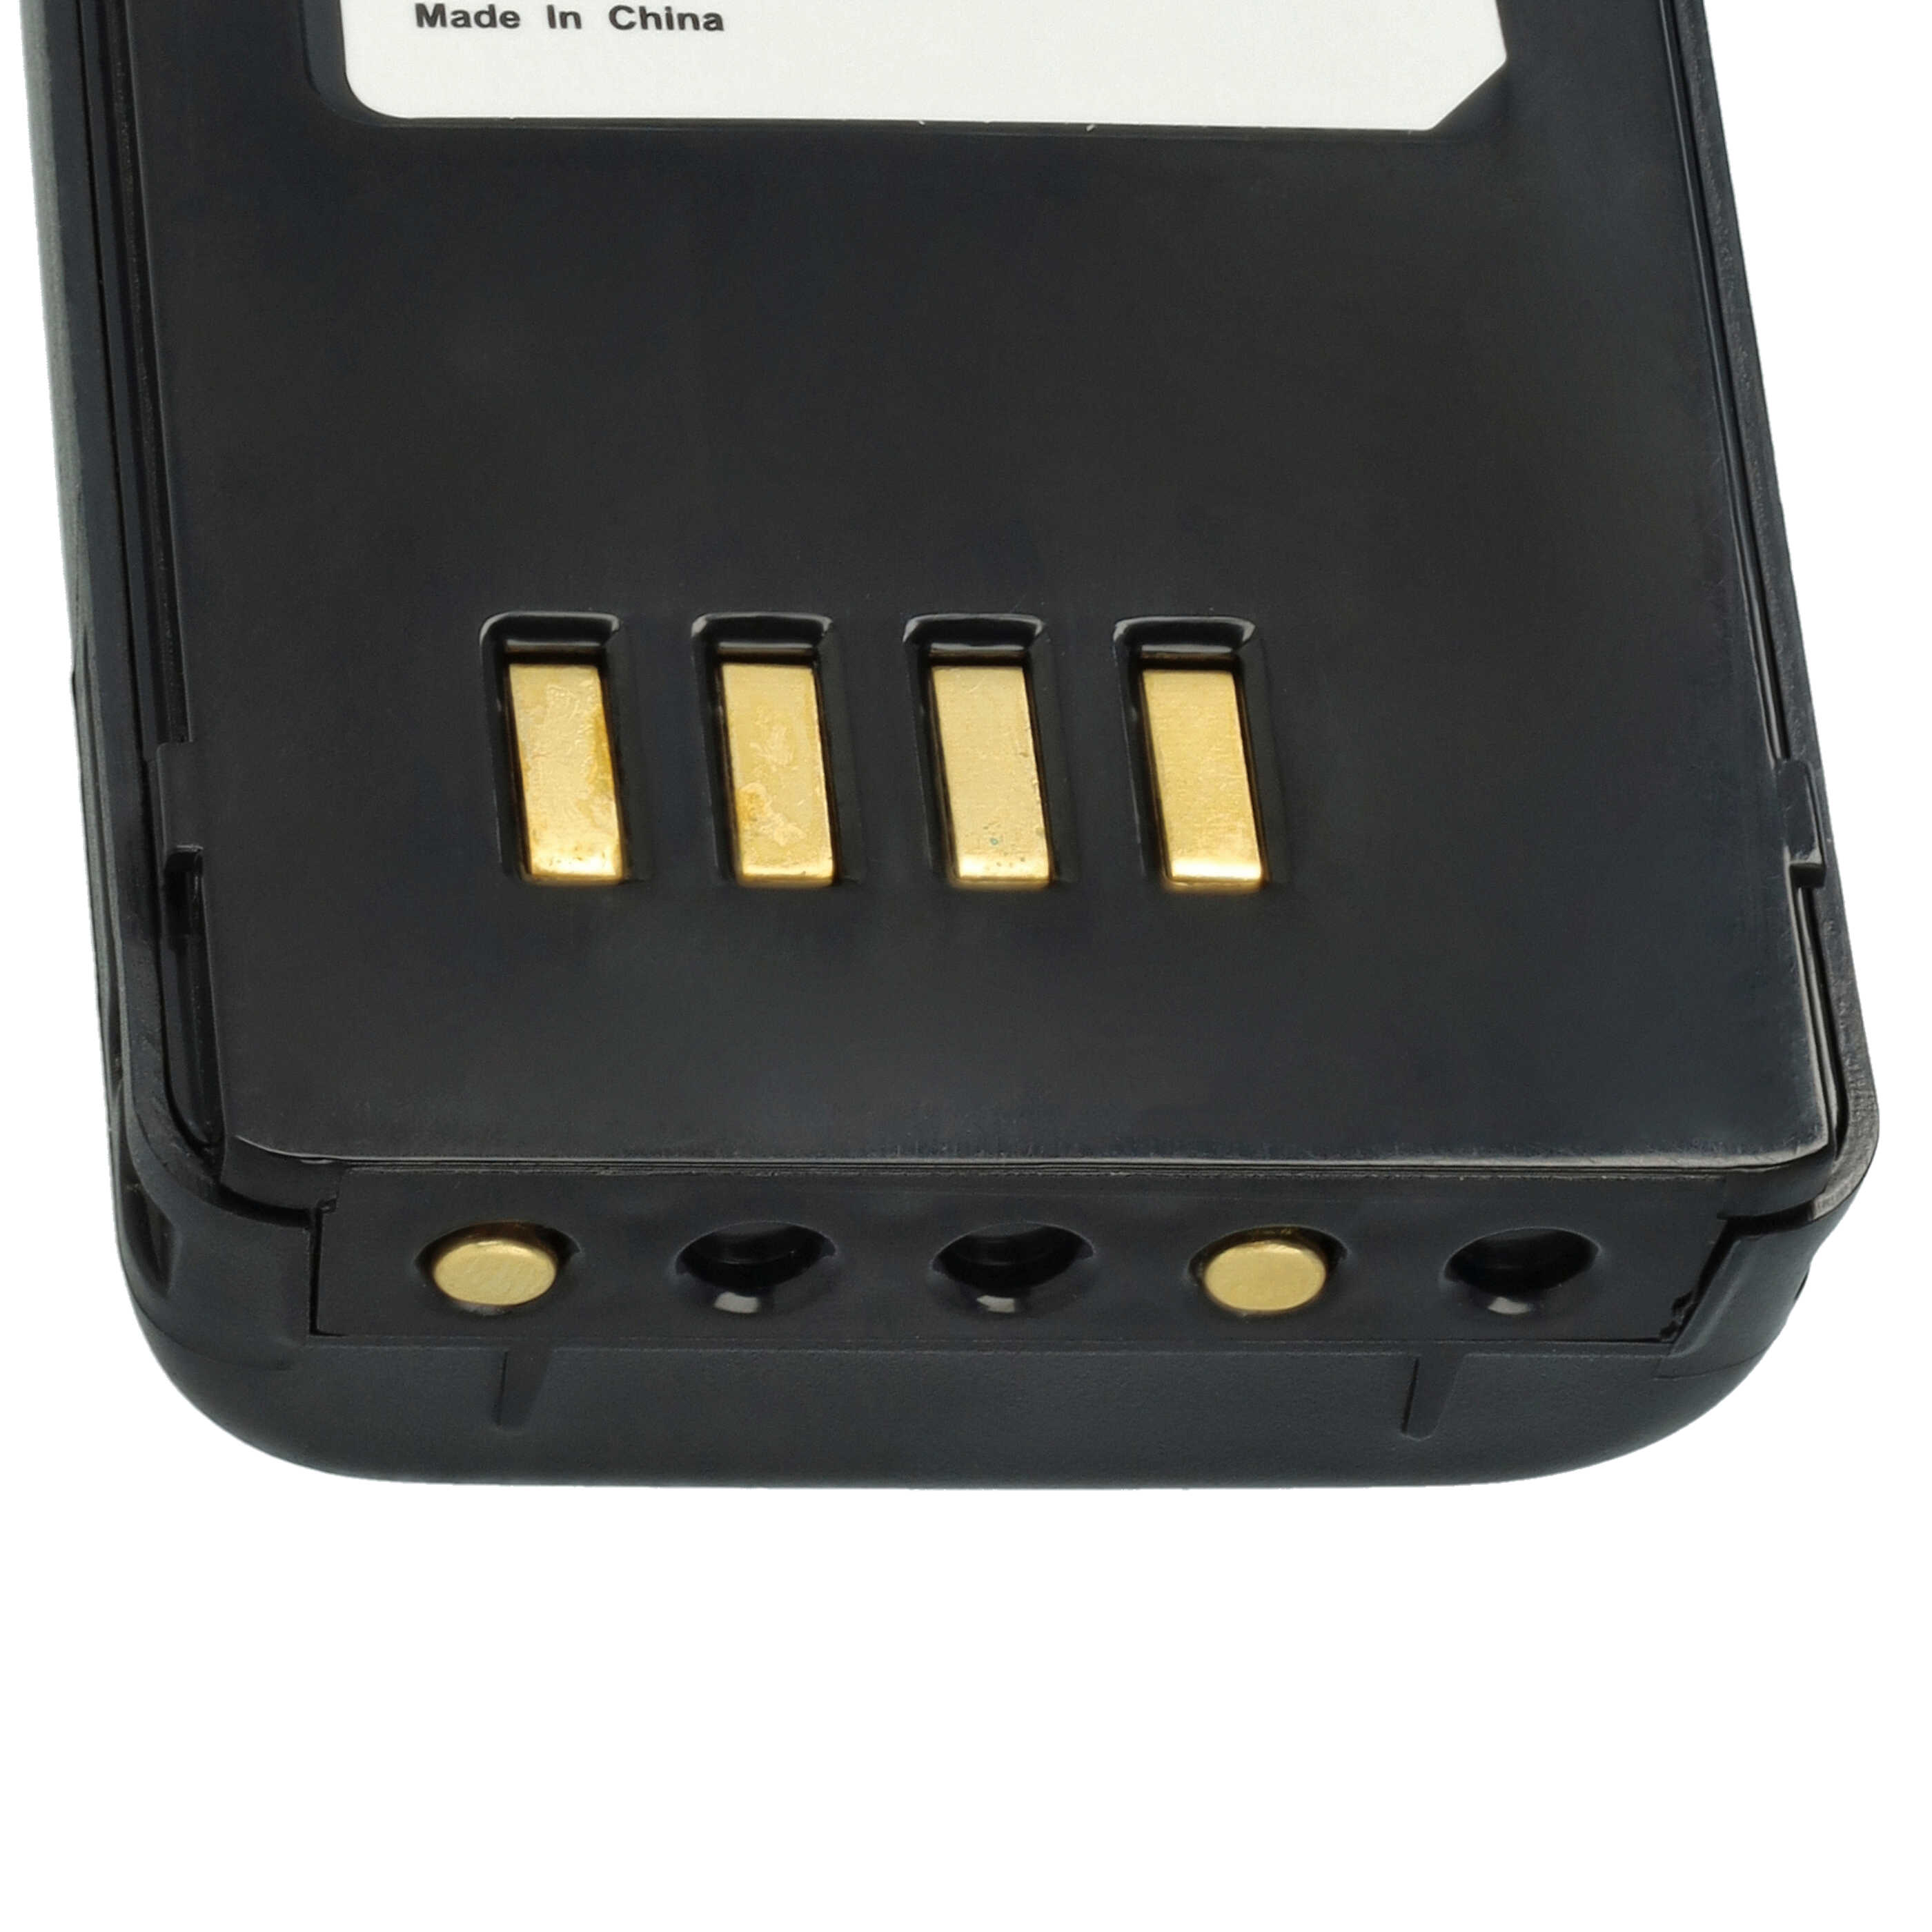 Batterie remplace FNB-41, FNB-40 pour radio talkie-walkie - 1000mAh 7,4V NiMH